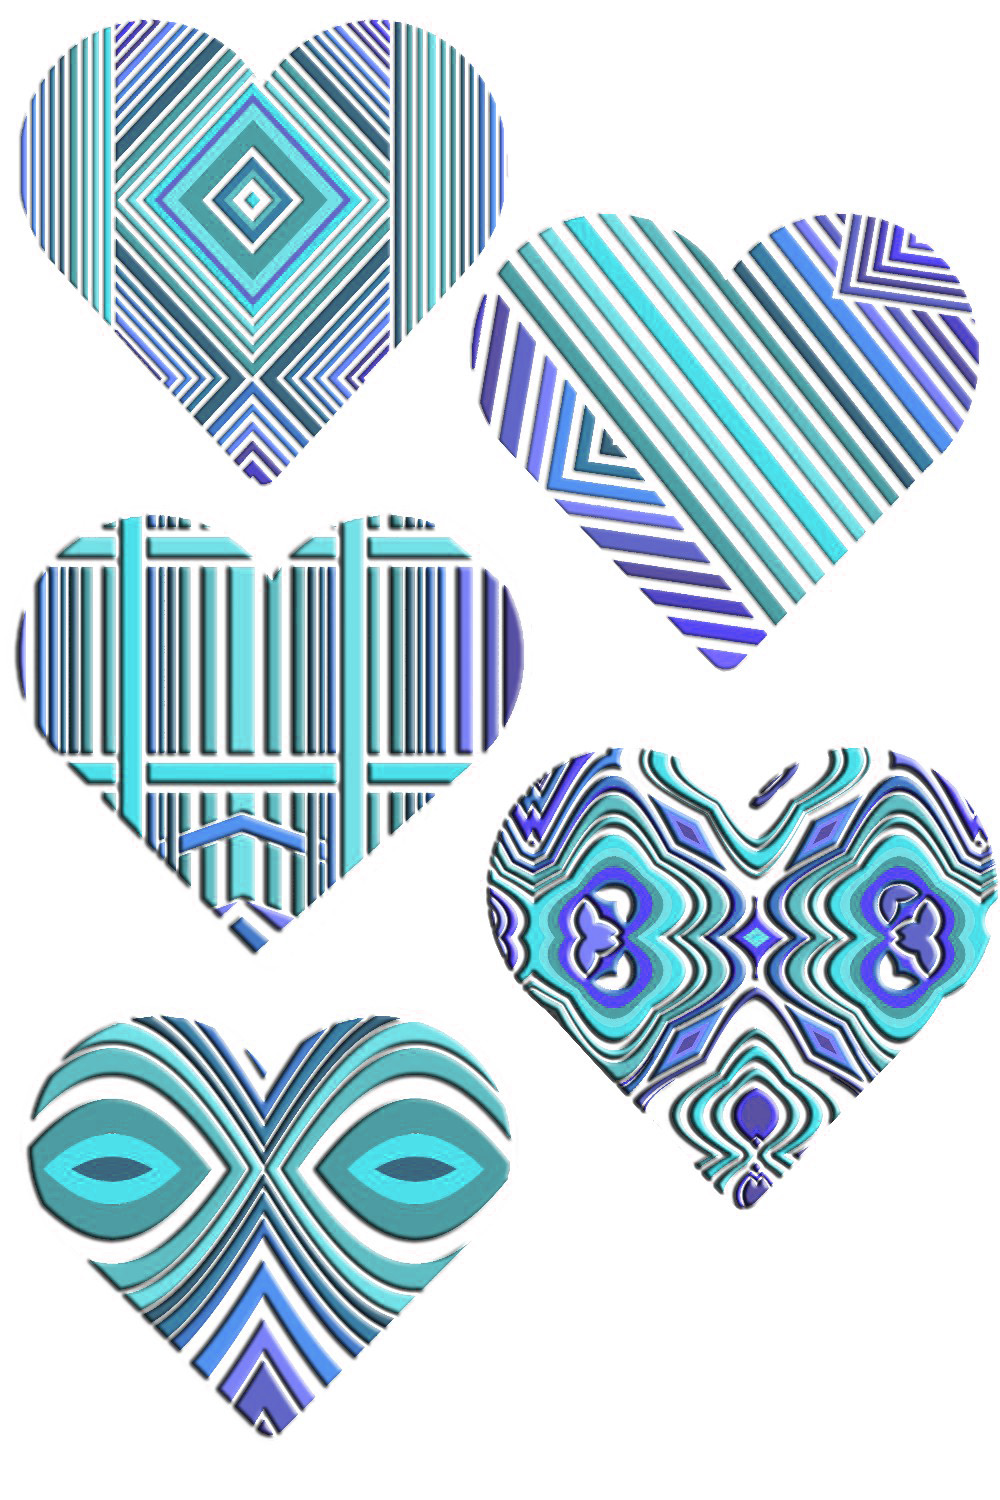 Blue Foam Heart Geometric Cutouts DXF Files pinterest preview image.